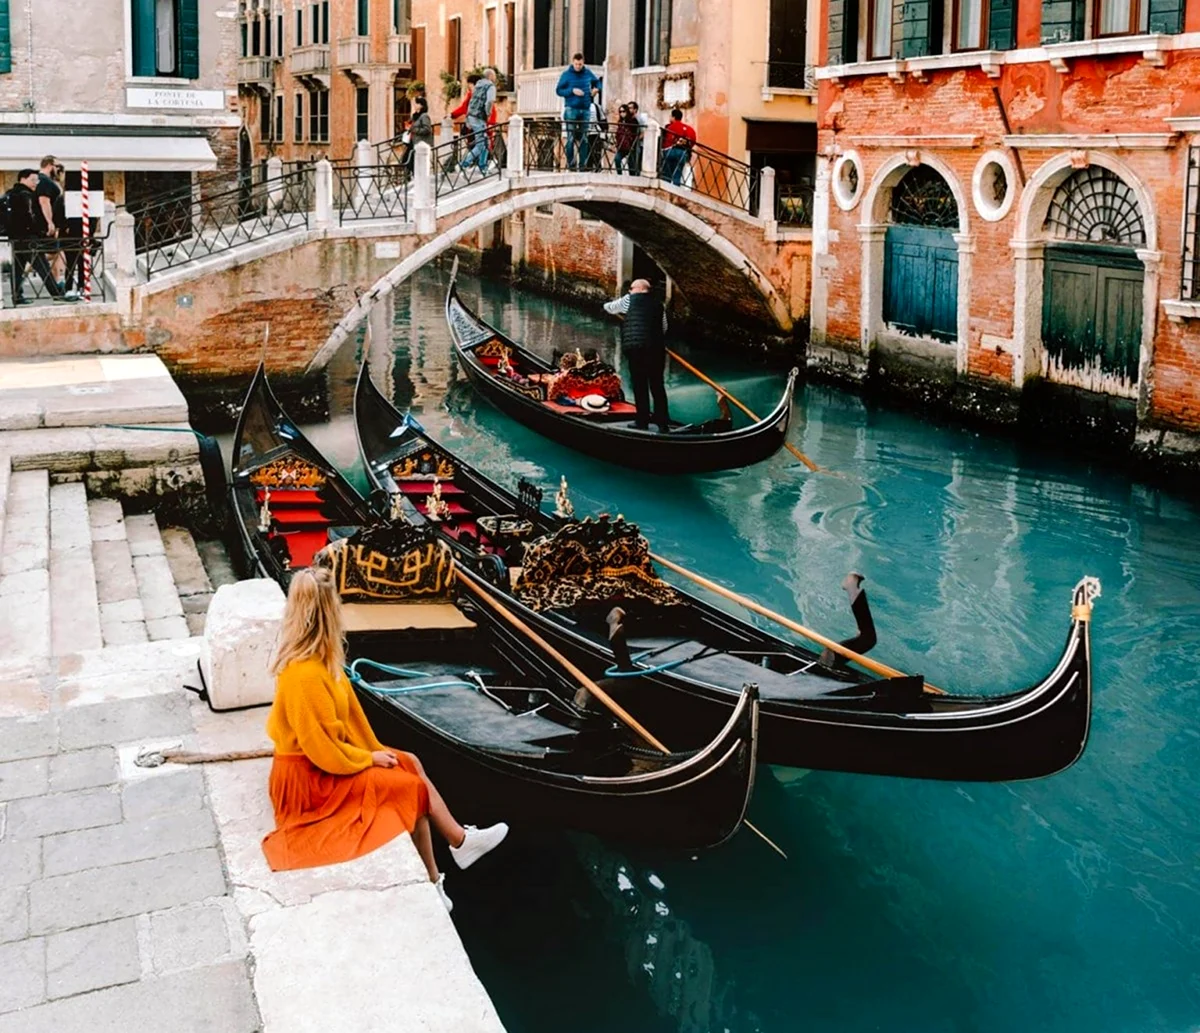 Бирюзовый канал Венеция Италия. Картинка